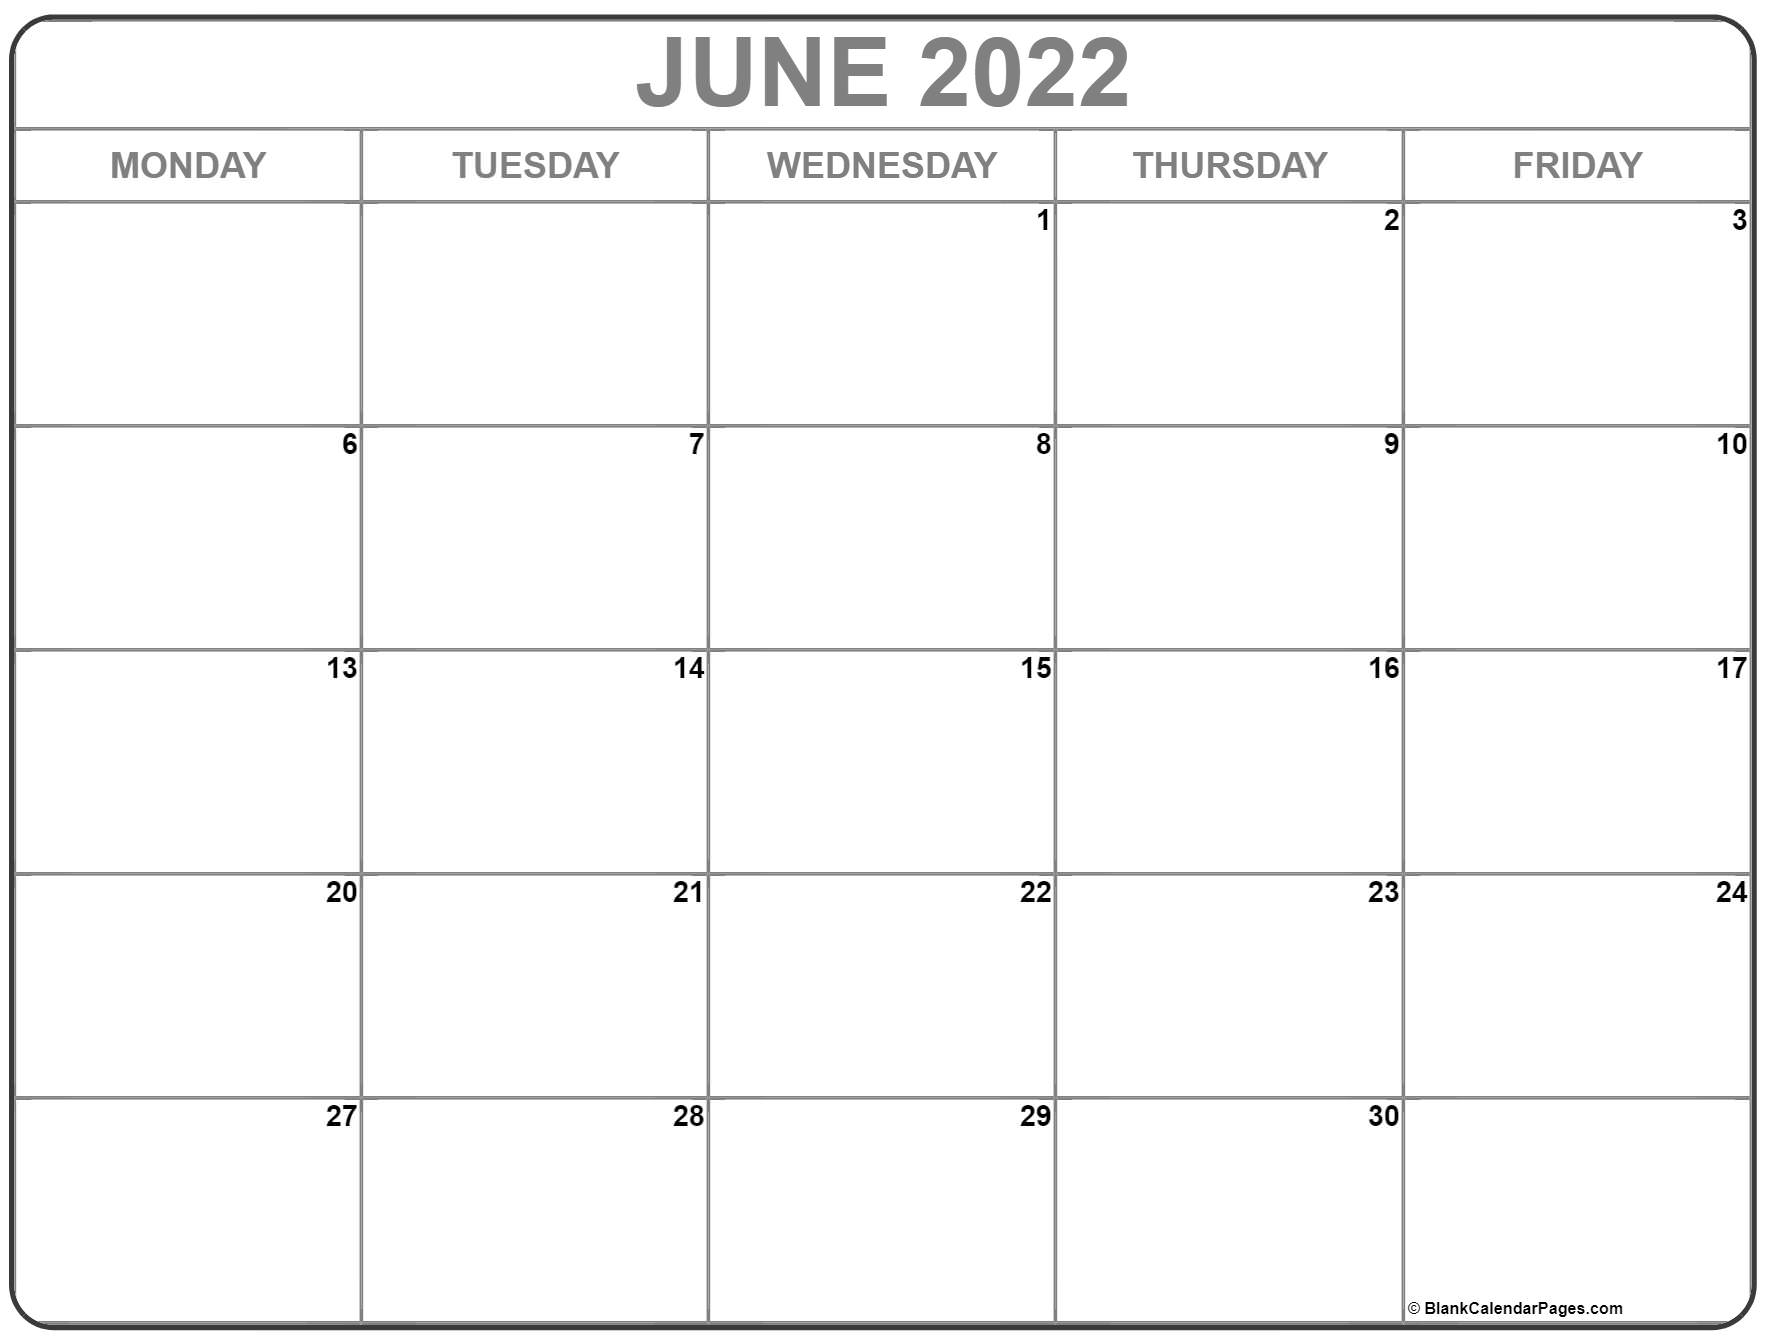 June 2022 Monday Calendar | Monday To Sunday